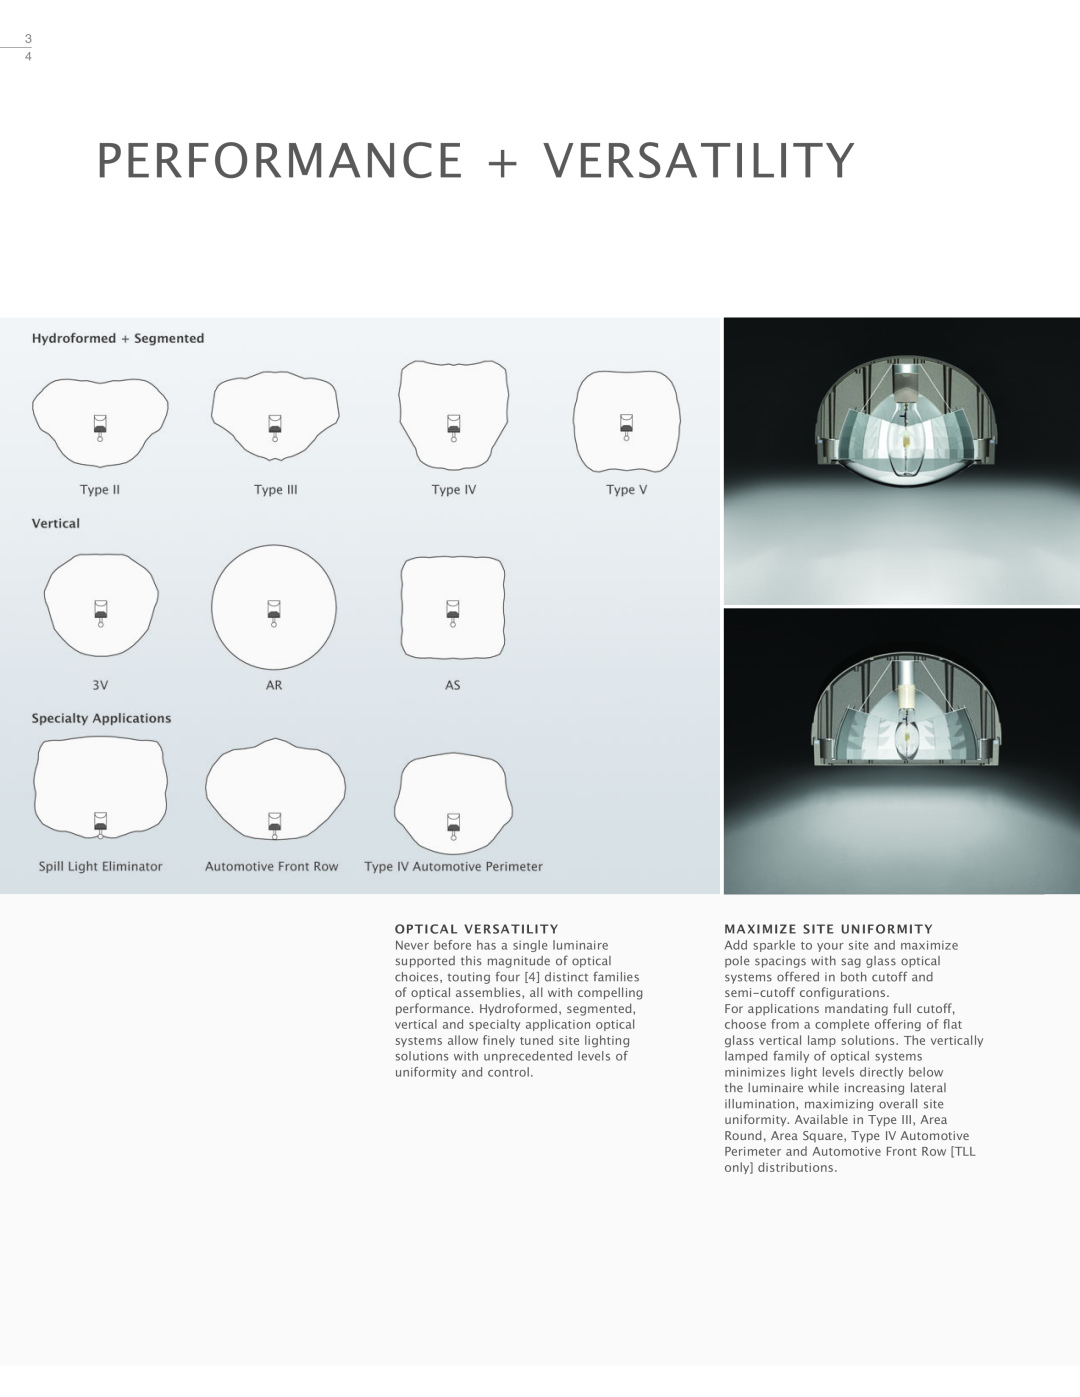 Cooper Lighting Architectural Area Luminaire Performance + Versatility, Optical Versatility, Maximize Site Uniformity 